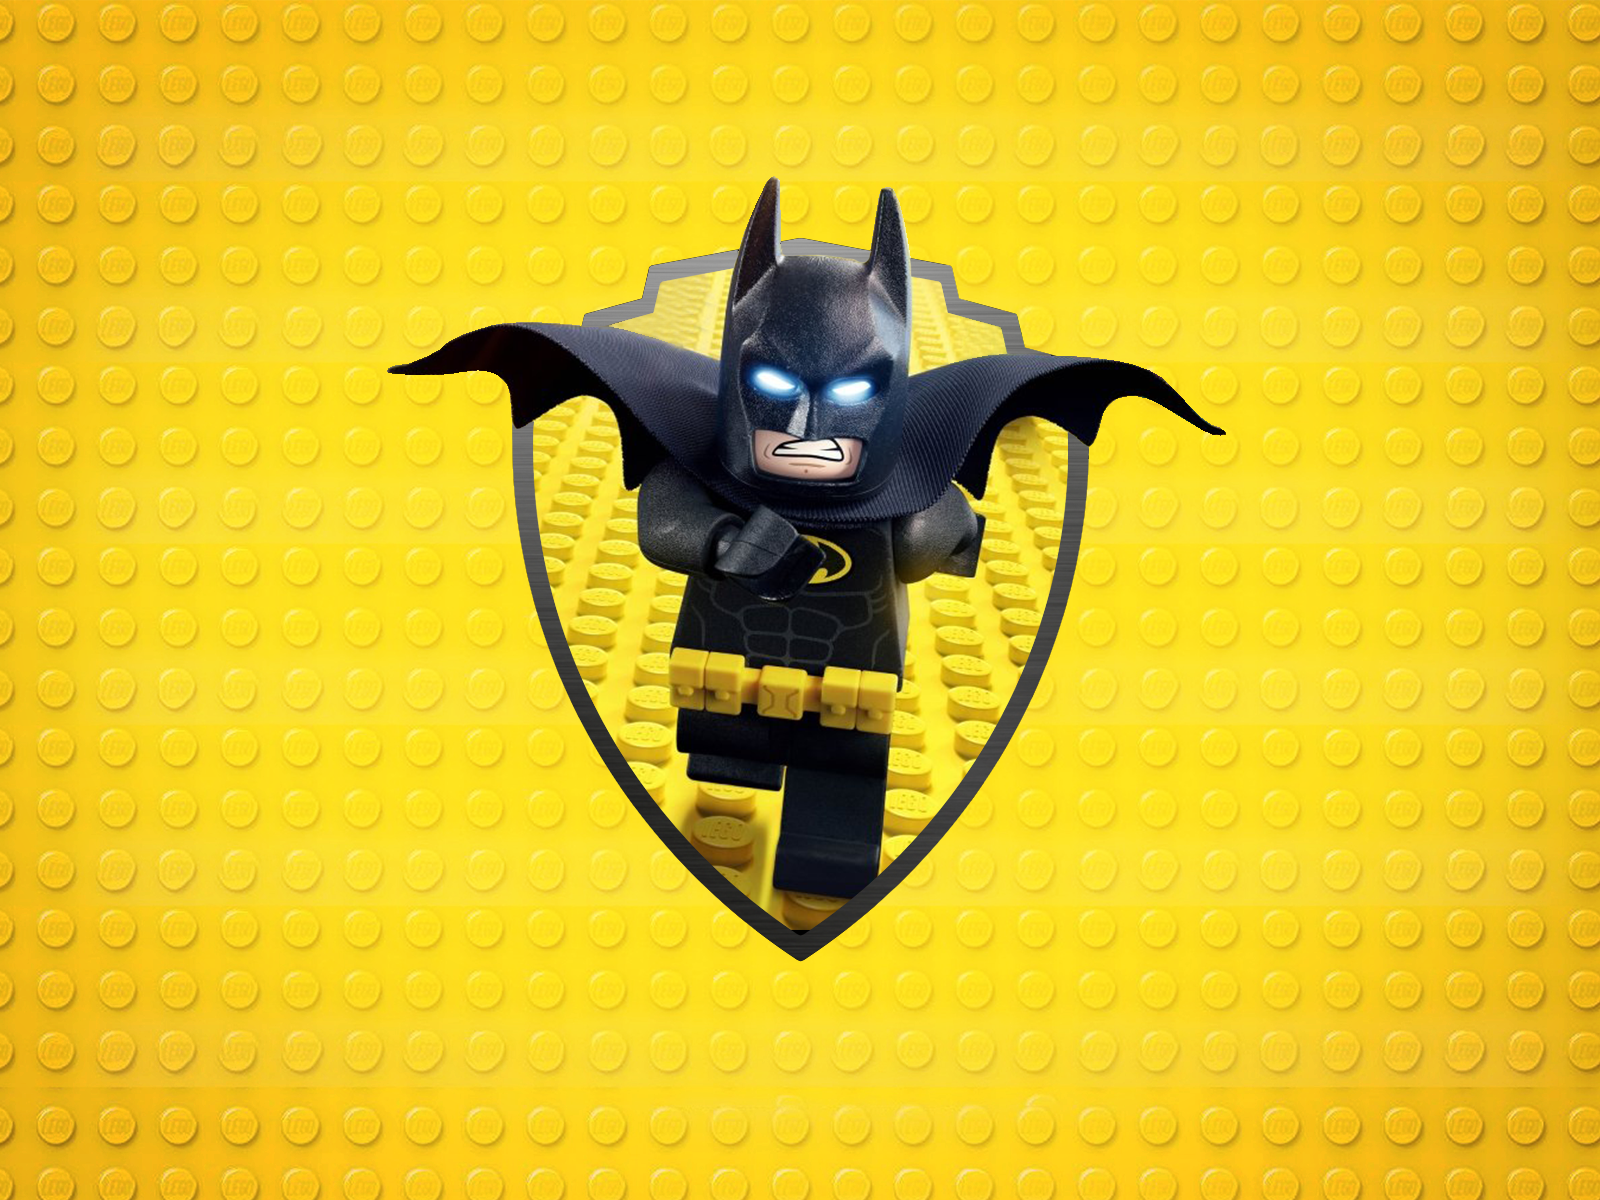 Lego Batman Movie x Warner Bros by Rahal Nejraoui on Dribbble